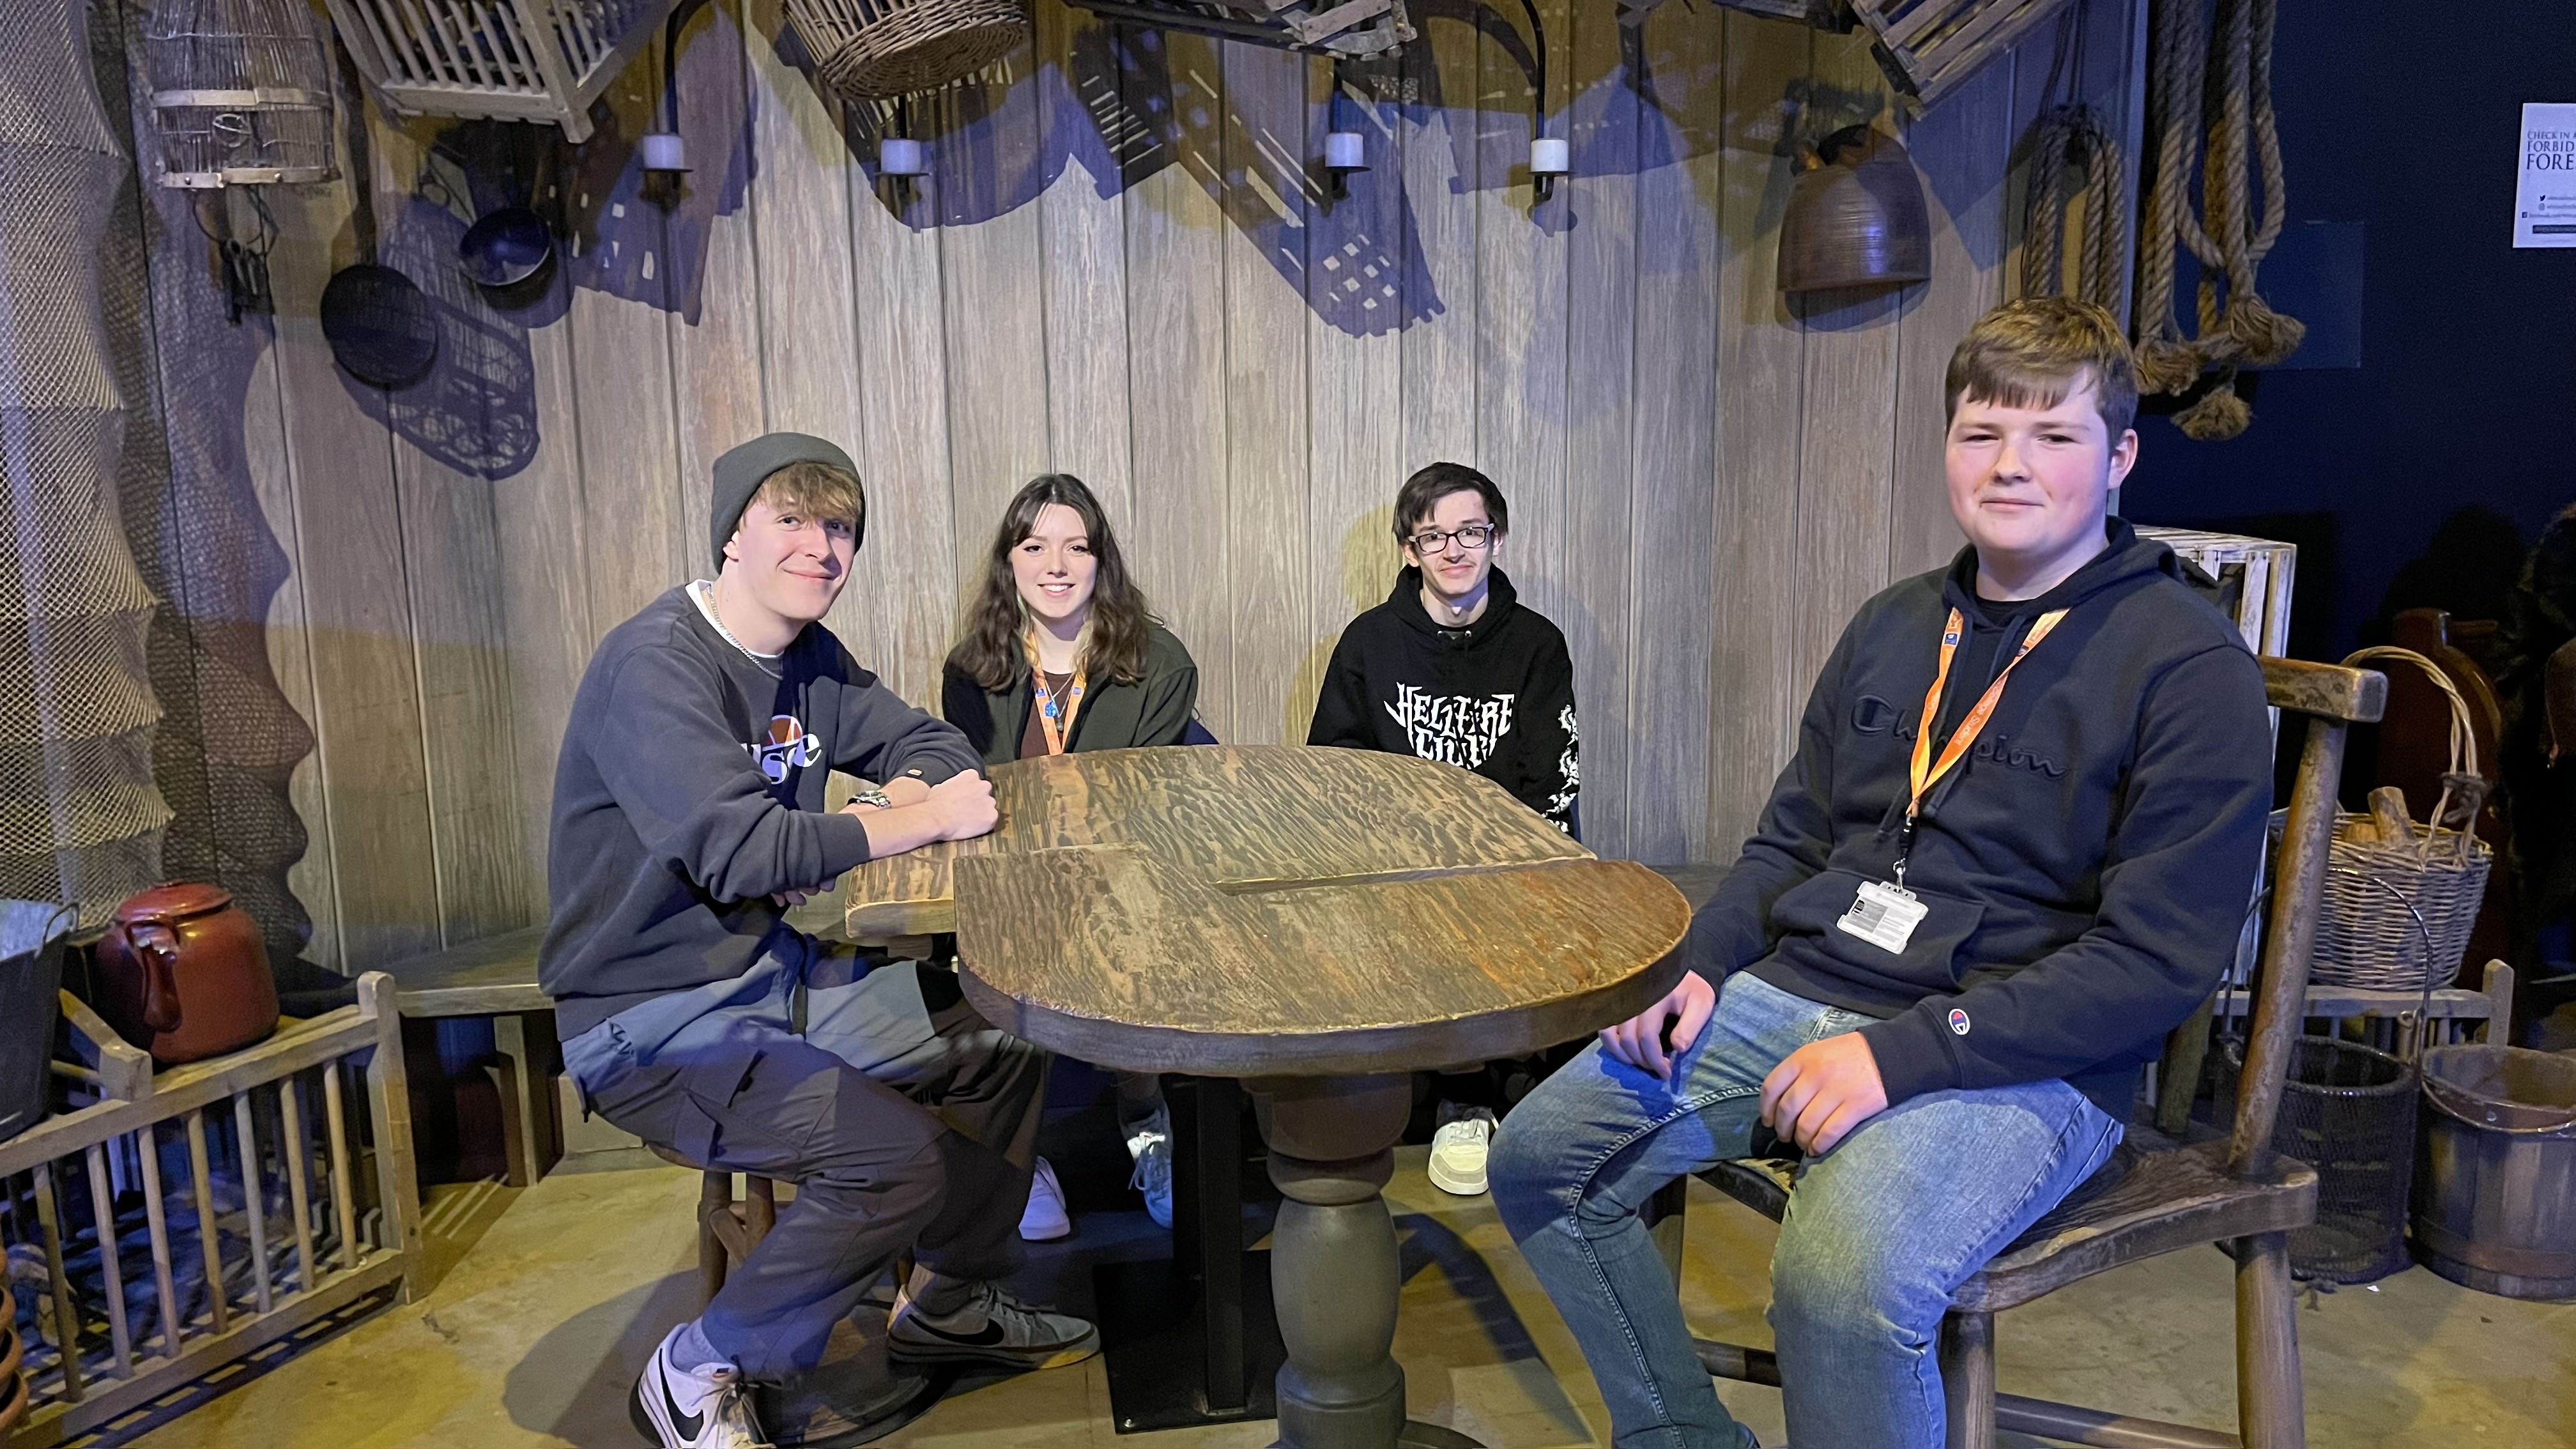 Weston College A Level Media trip to Harry Potter Studios